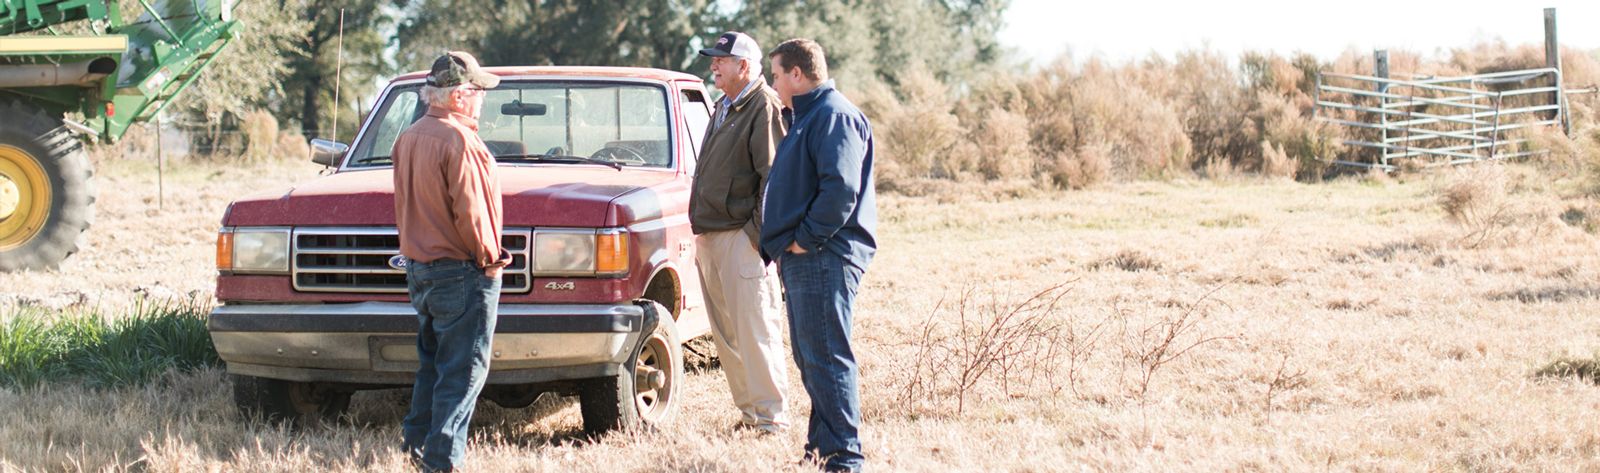 Georgia Farm Bureau provides grassroots support for rural communities